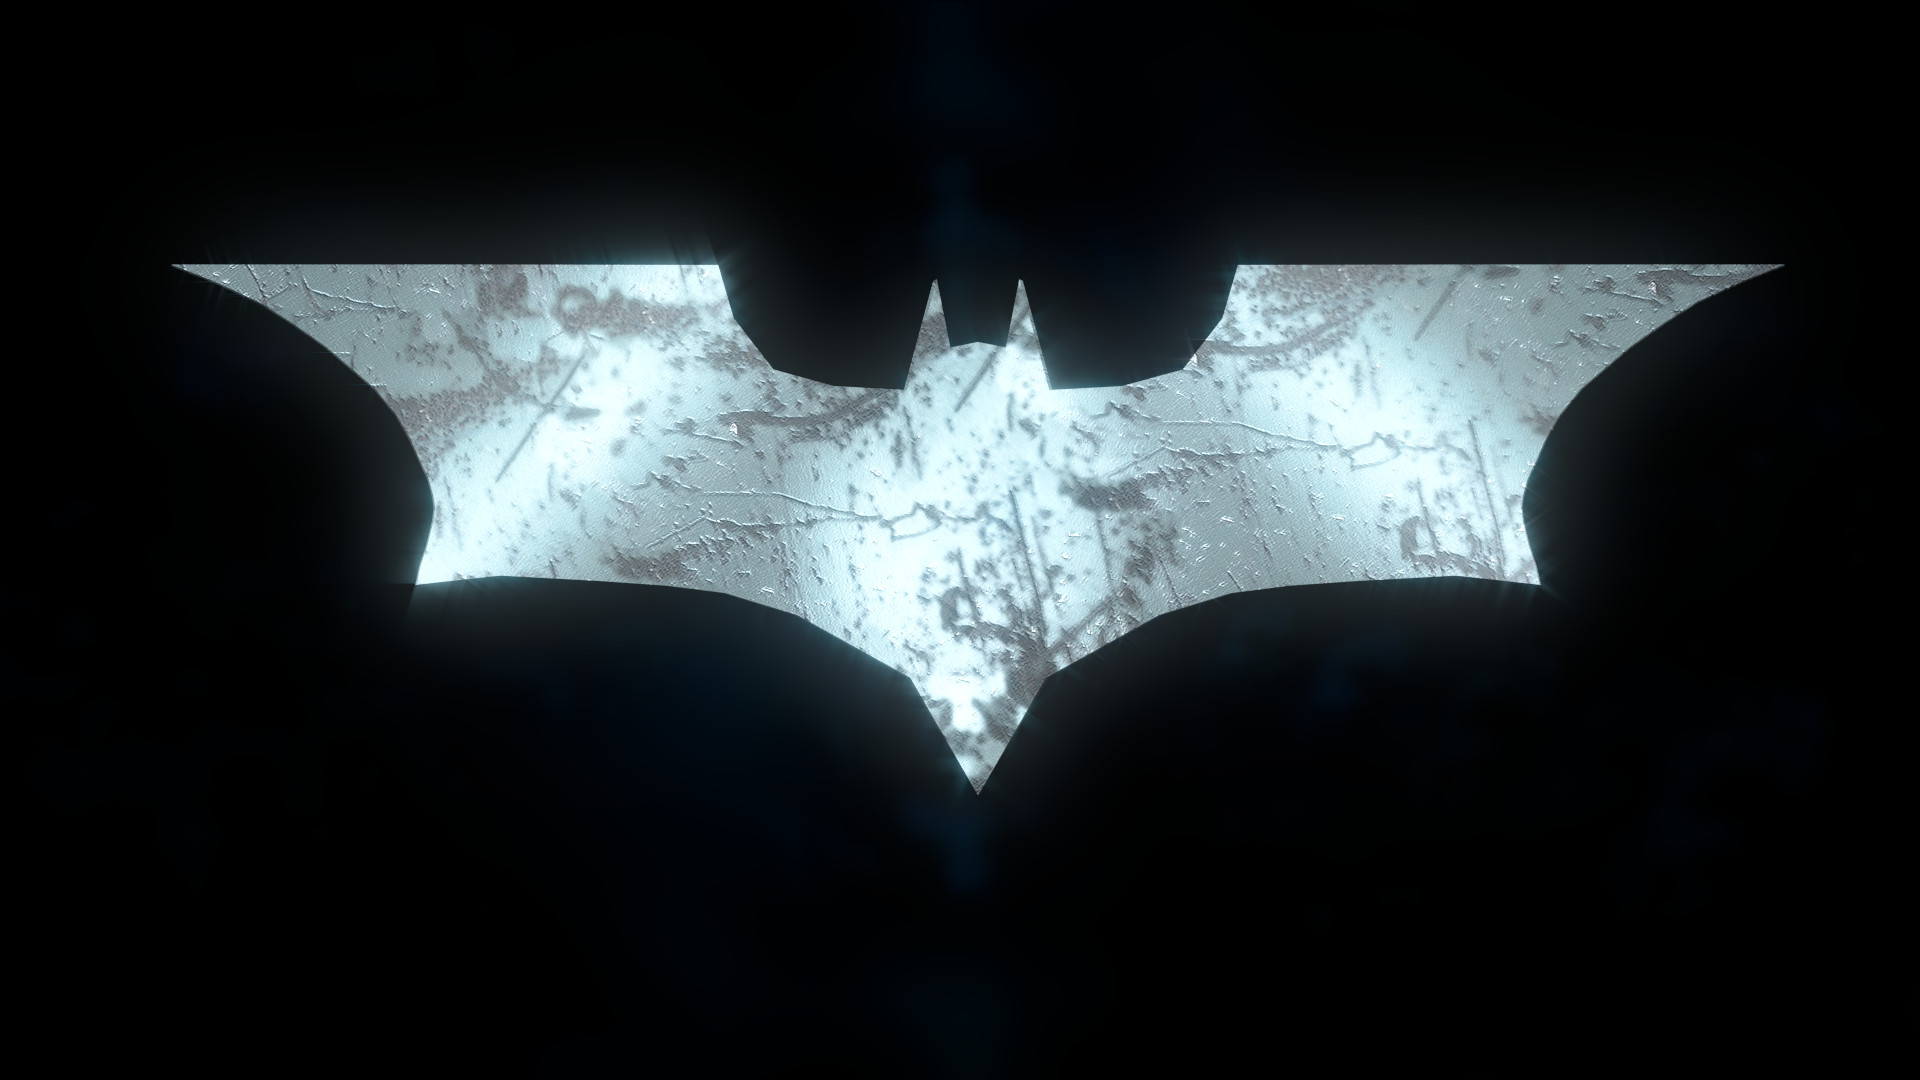 Batman the dark knight rises wallpaper Wallpapers 4k Pinterest Dark knight, Knight and Movie